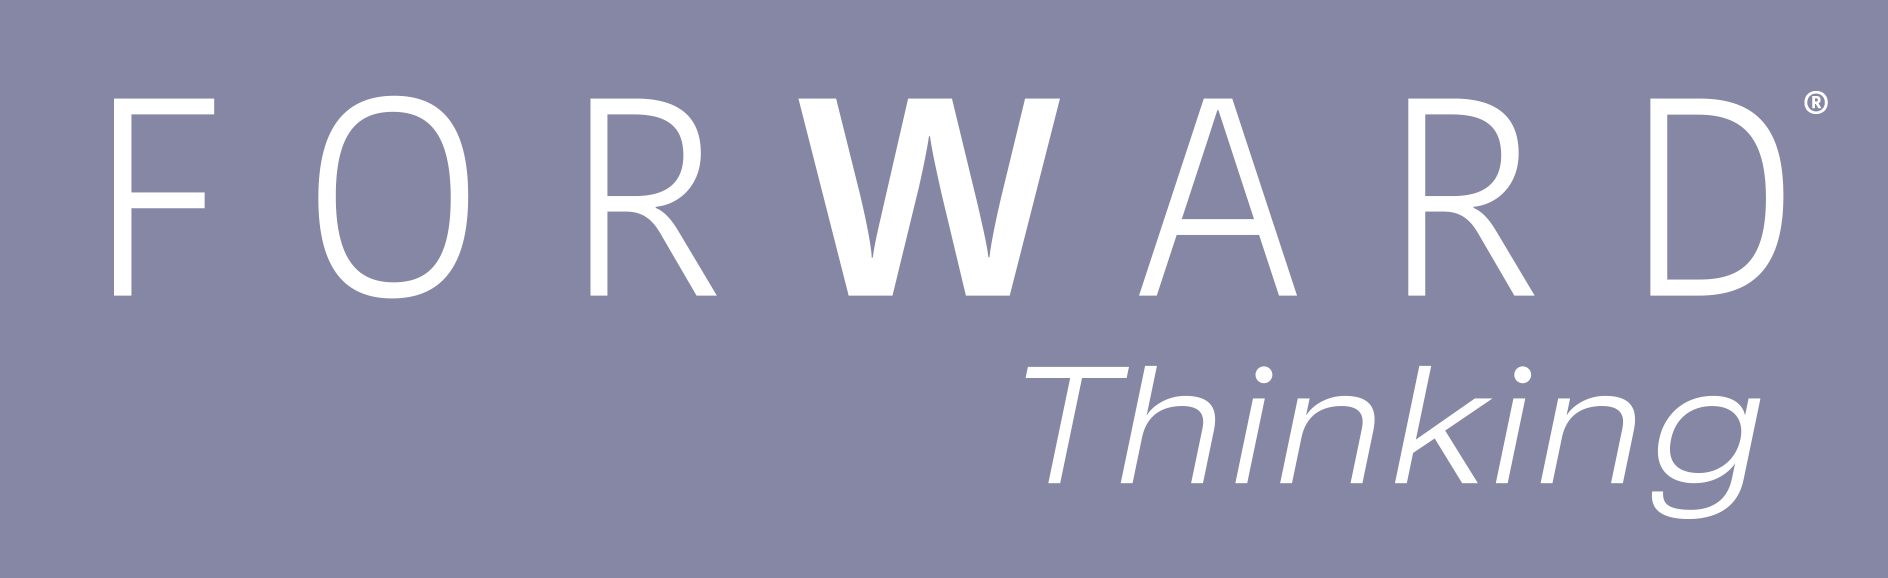 forward thinking webinar series logo